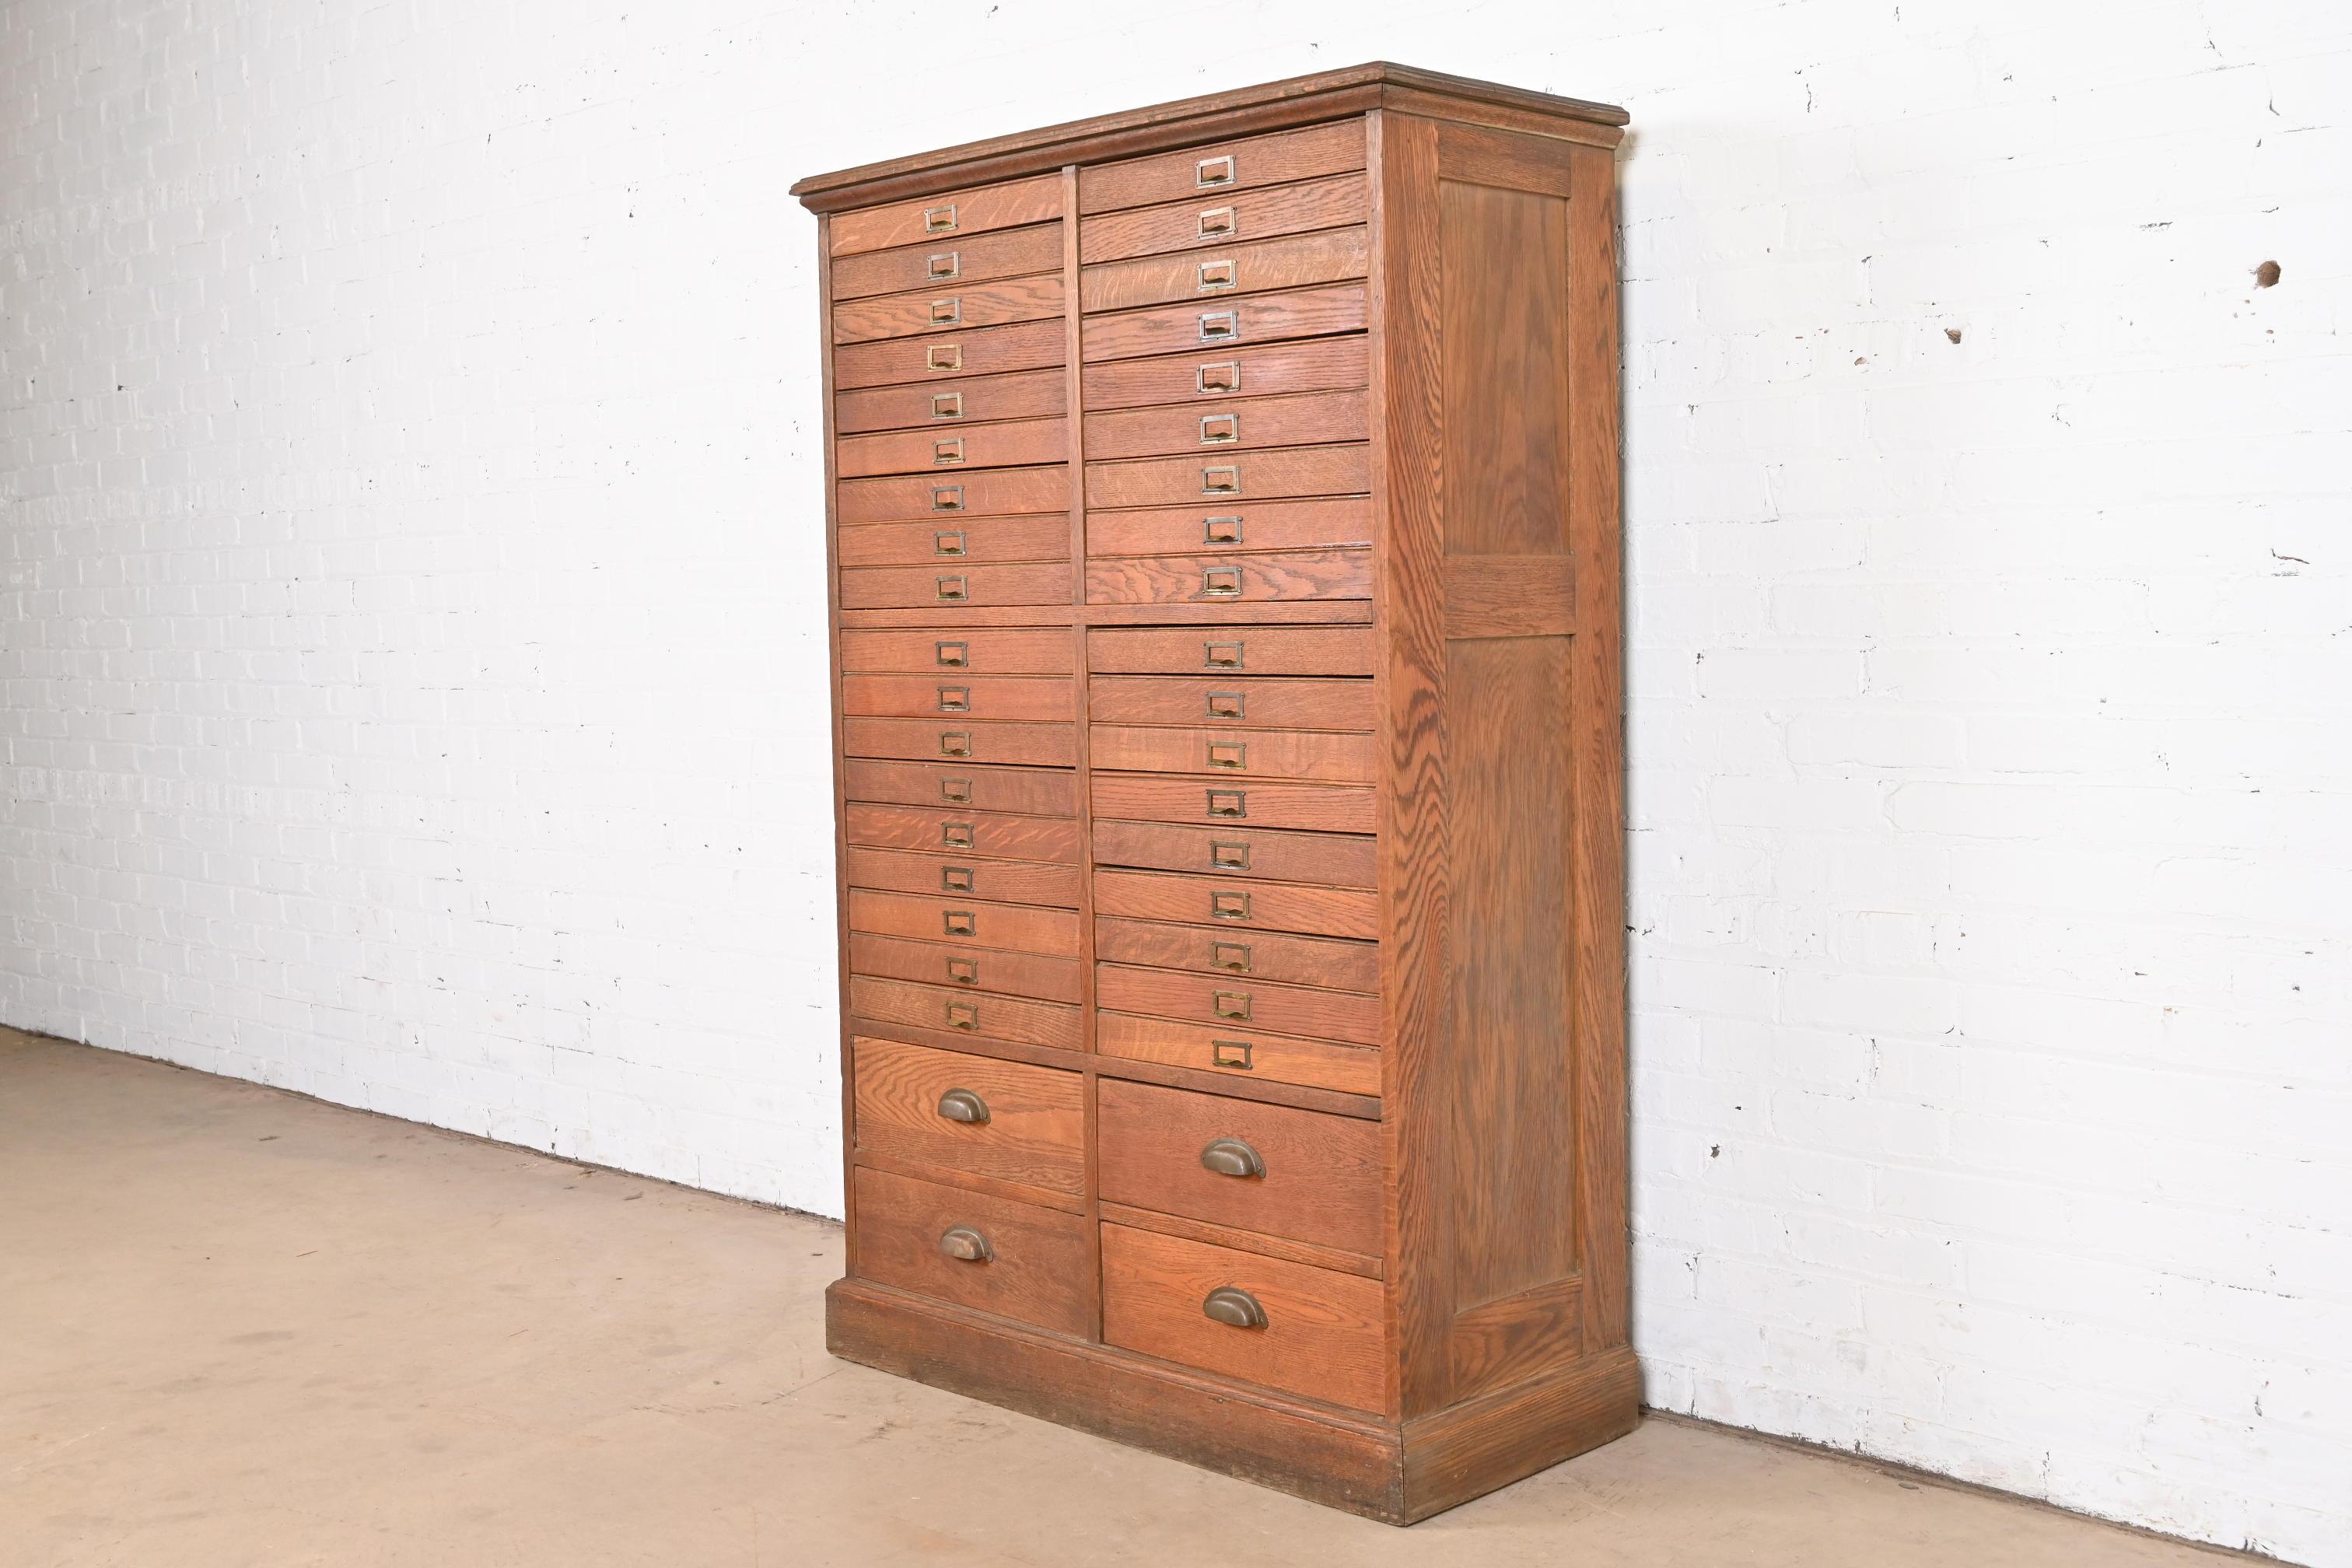 old filing cabinet